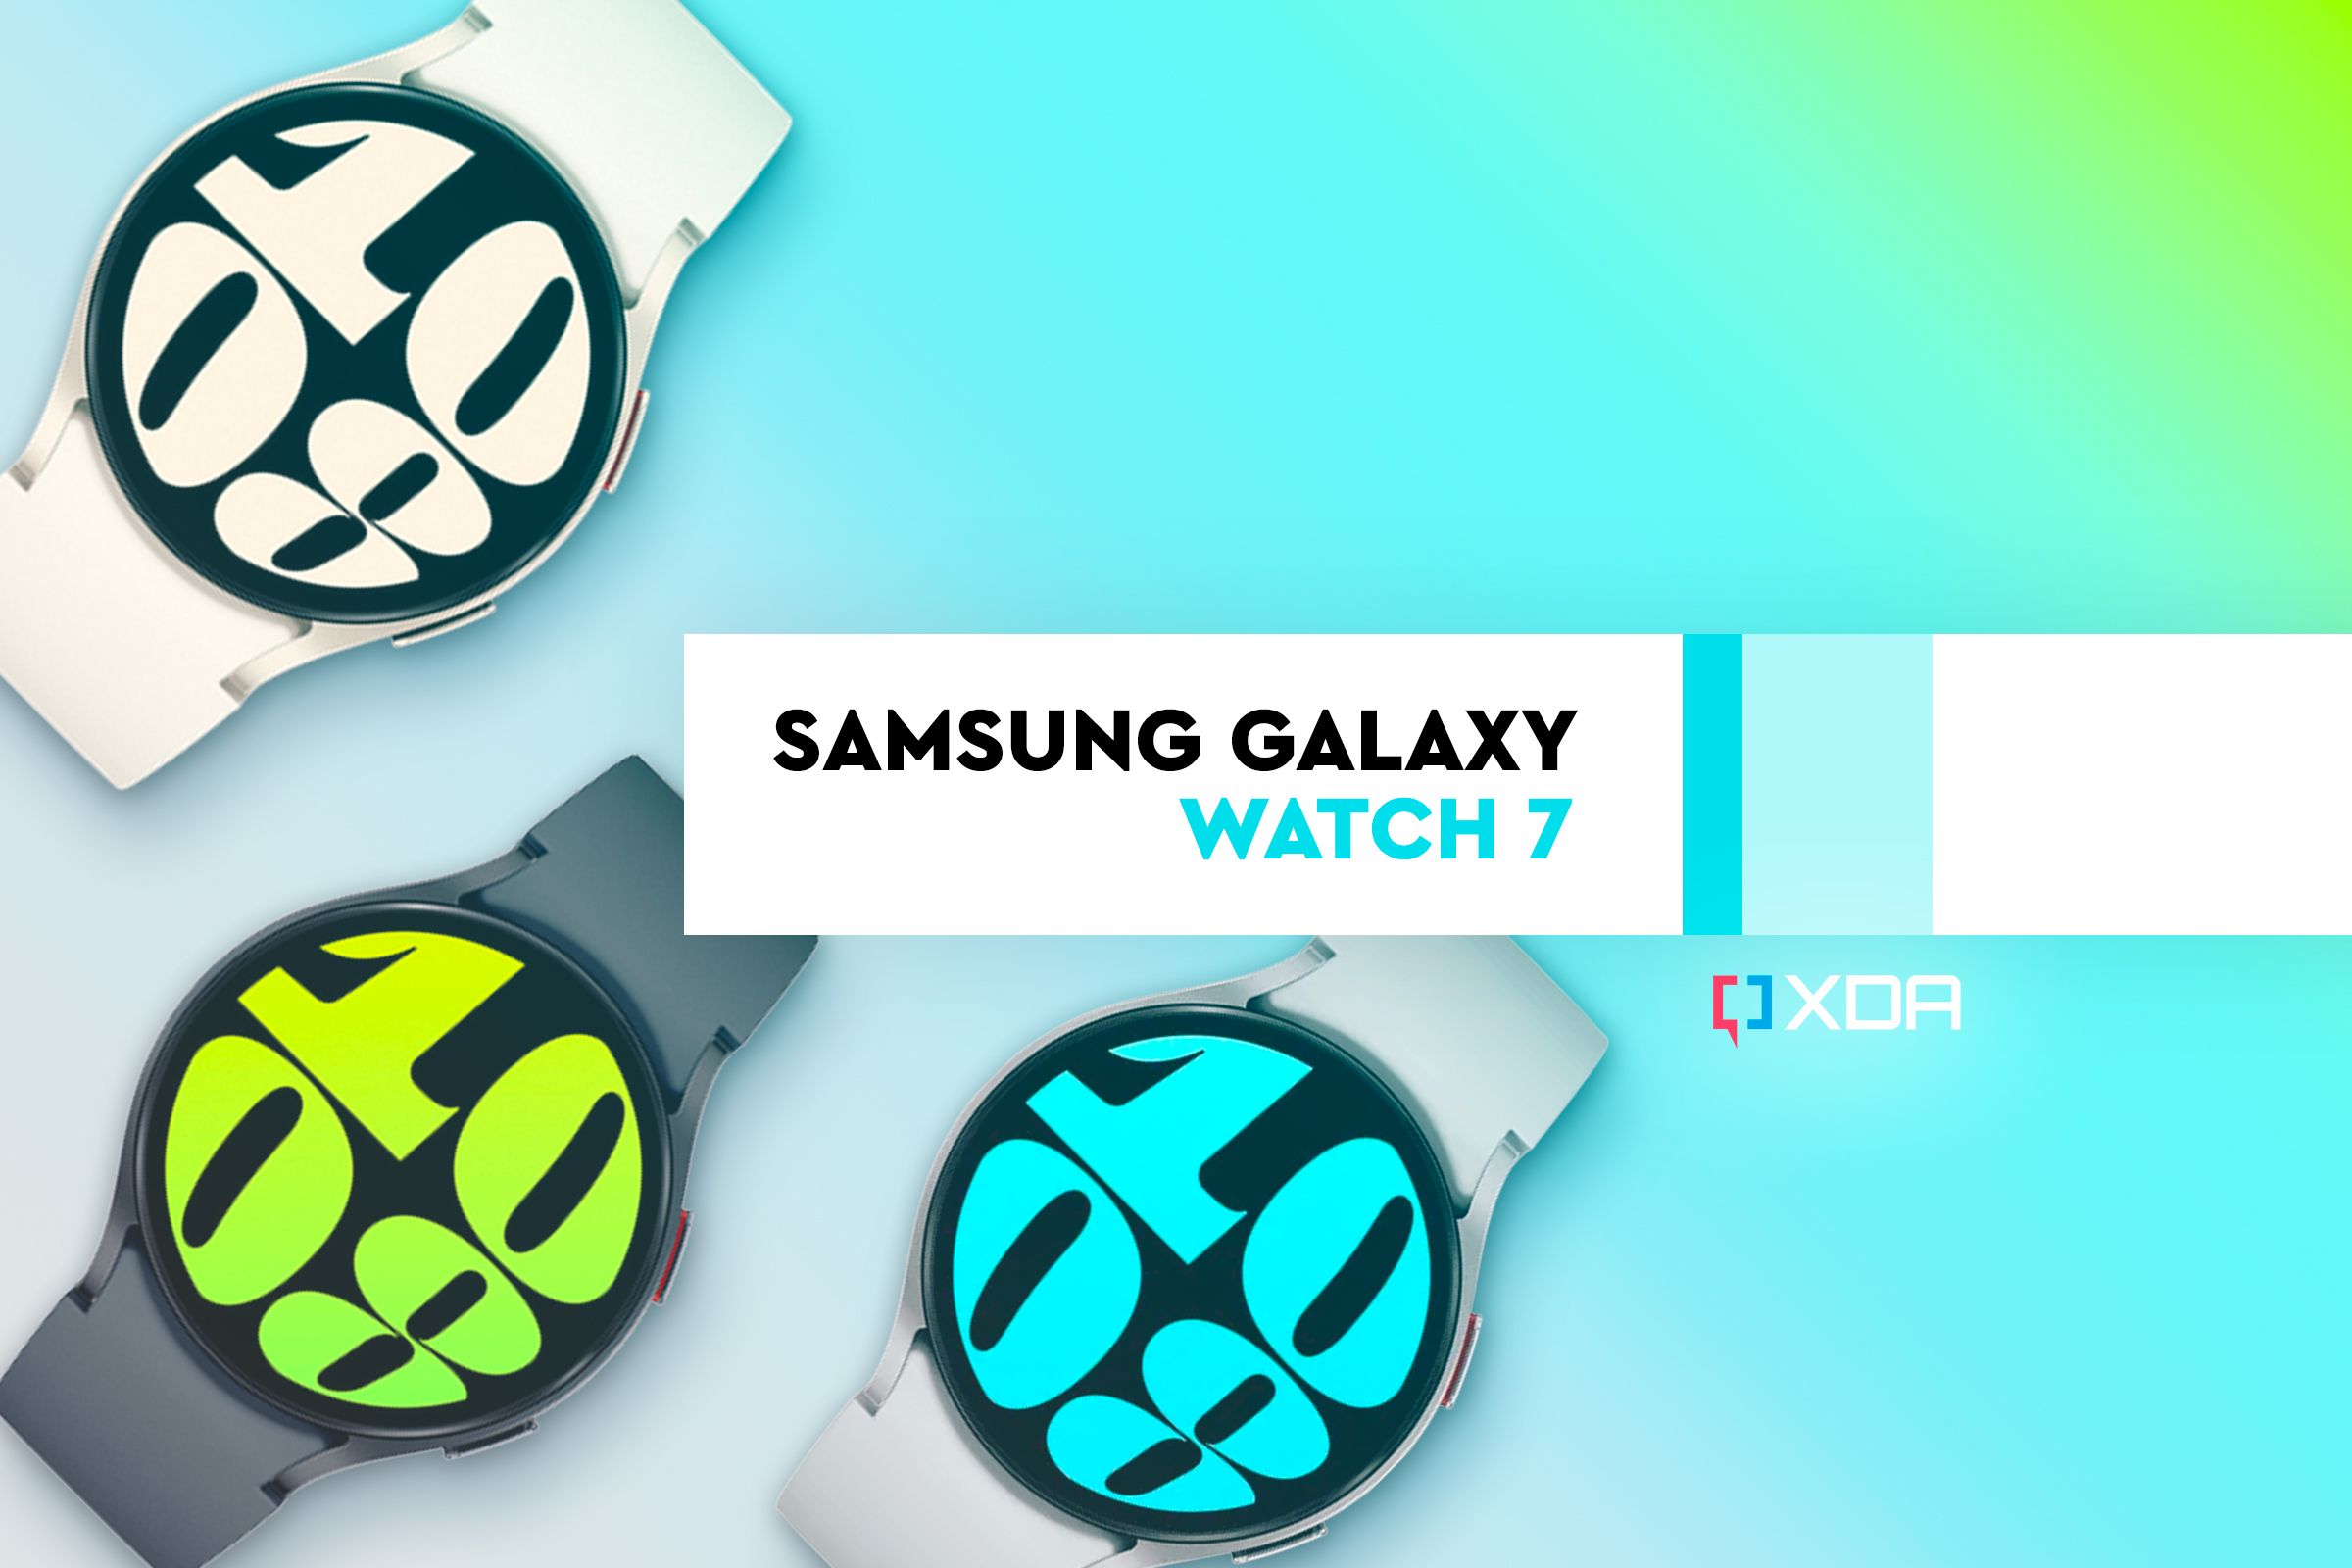 Samsung Galaxy Watch 7 feature image